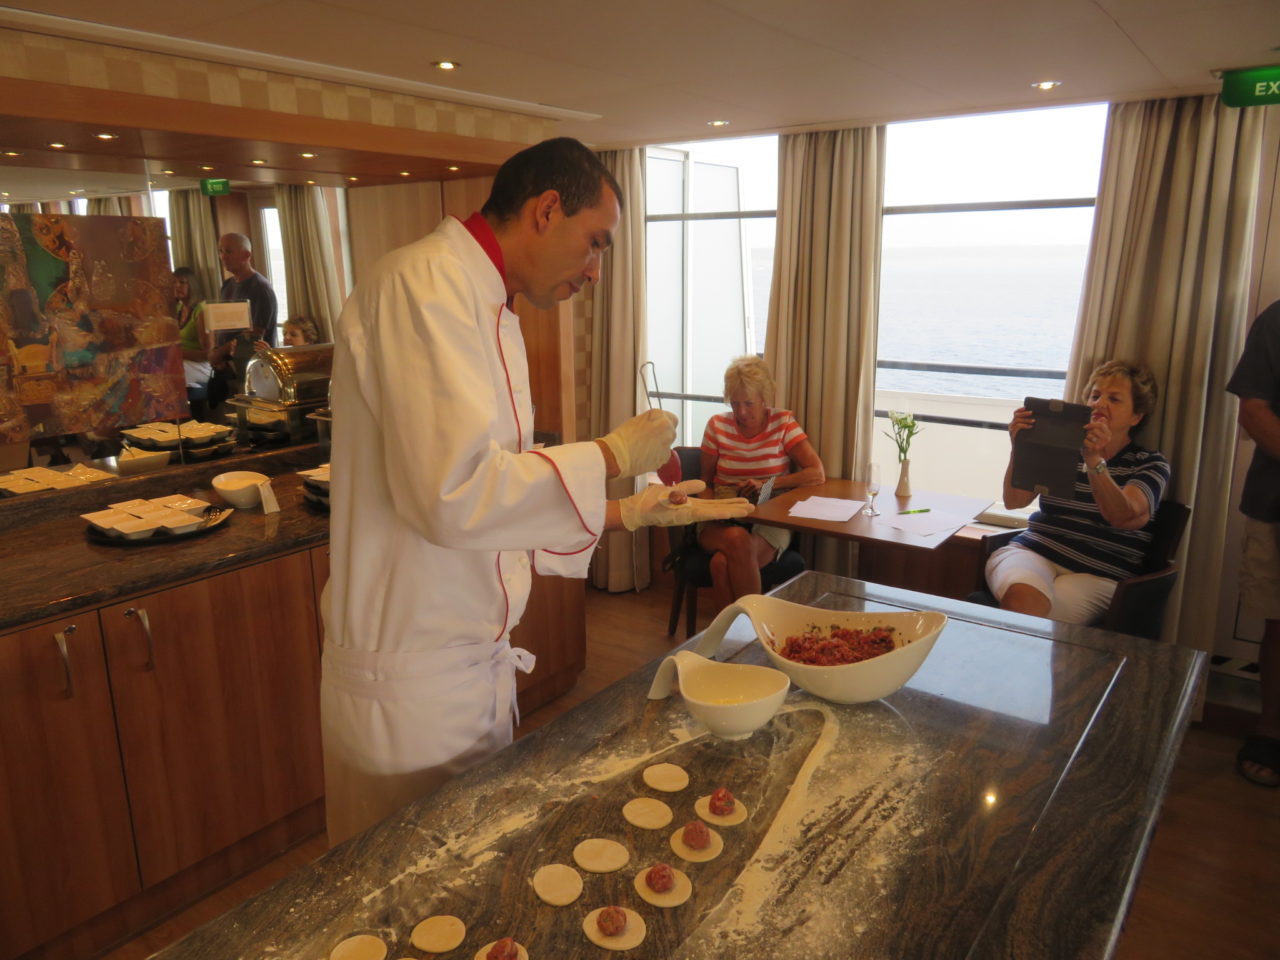 Russian Pelmeni cooking lesson by Executive Chef Danilo aboard the Viking Akun river cruise ship while cruising the Volga River